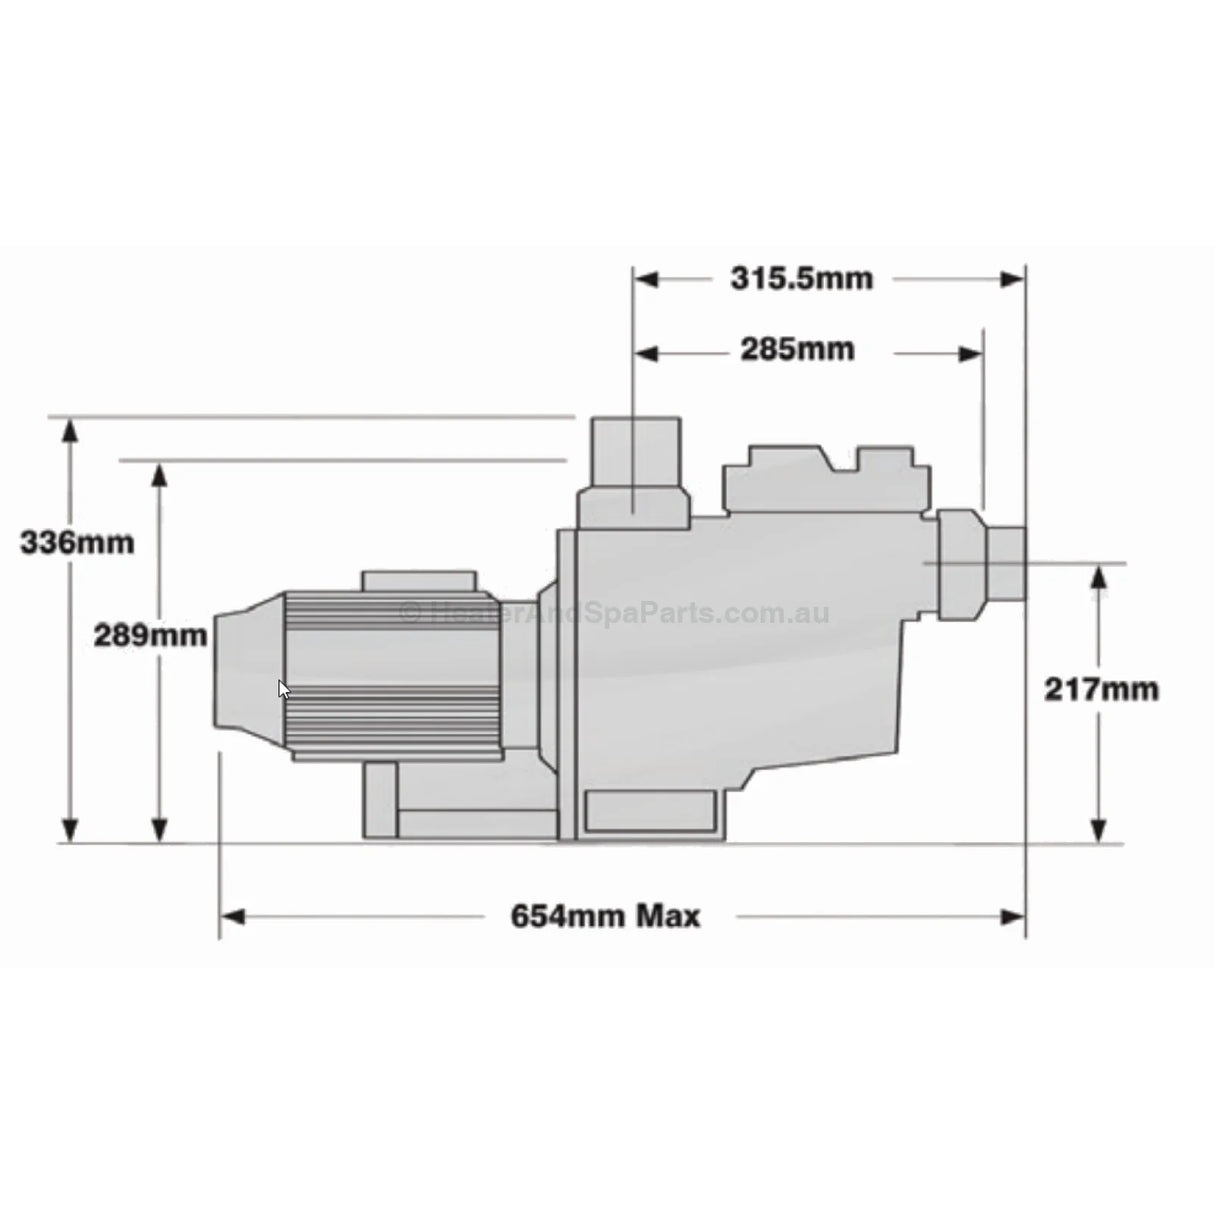 Astralpool E-Series Pumps - E140 / E170 / E230 - Heater and Spa Parts